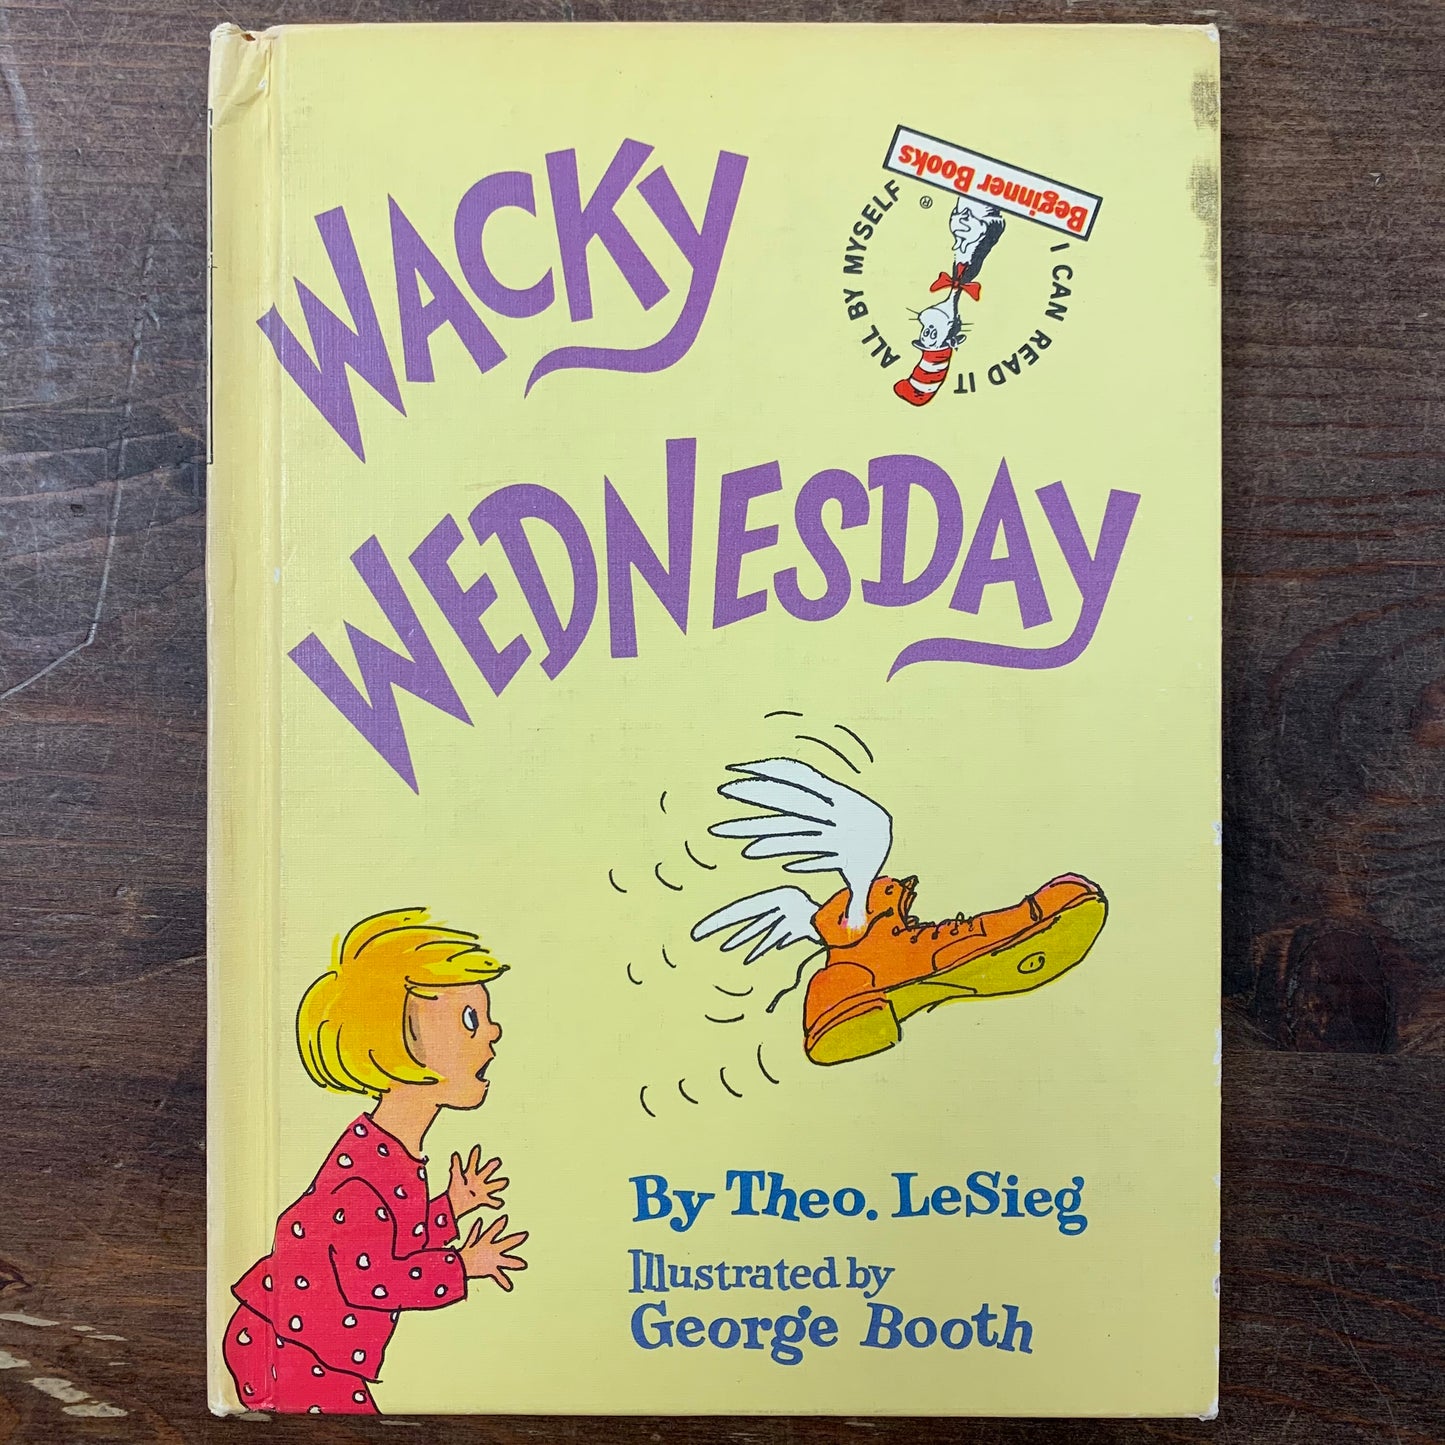 Vintage Wacky Wednesday